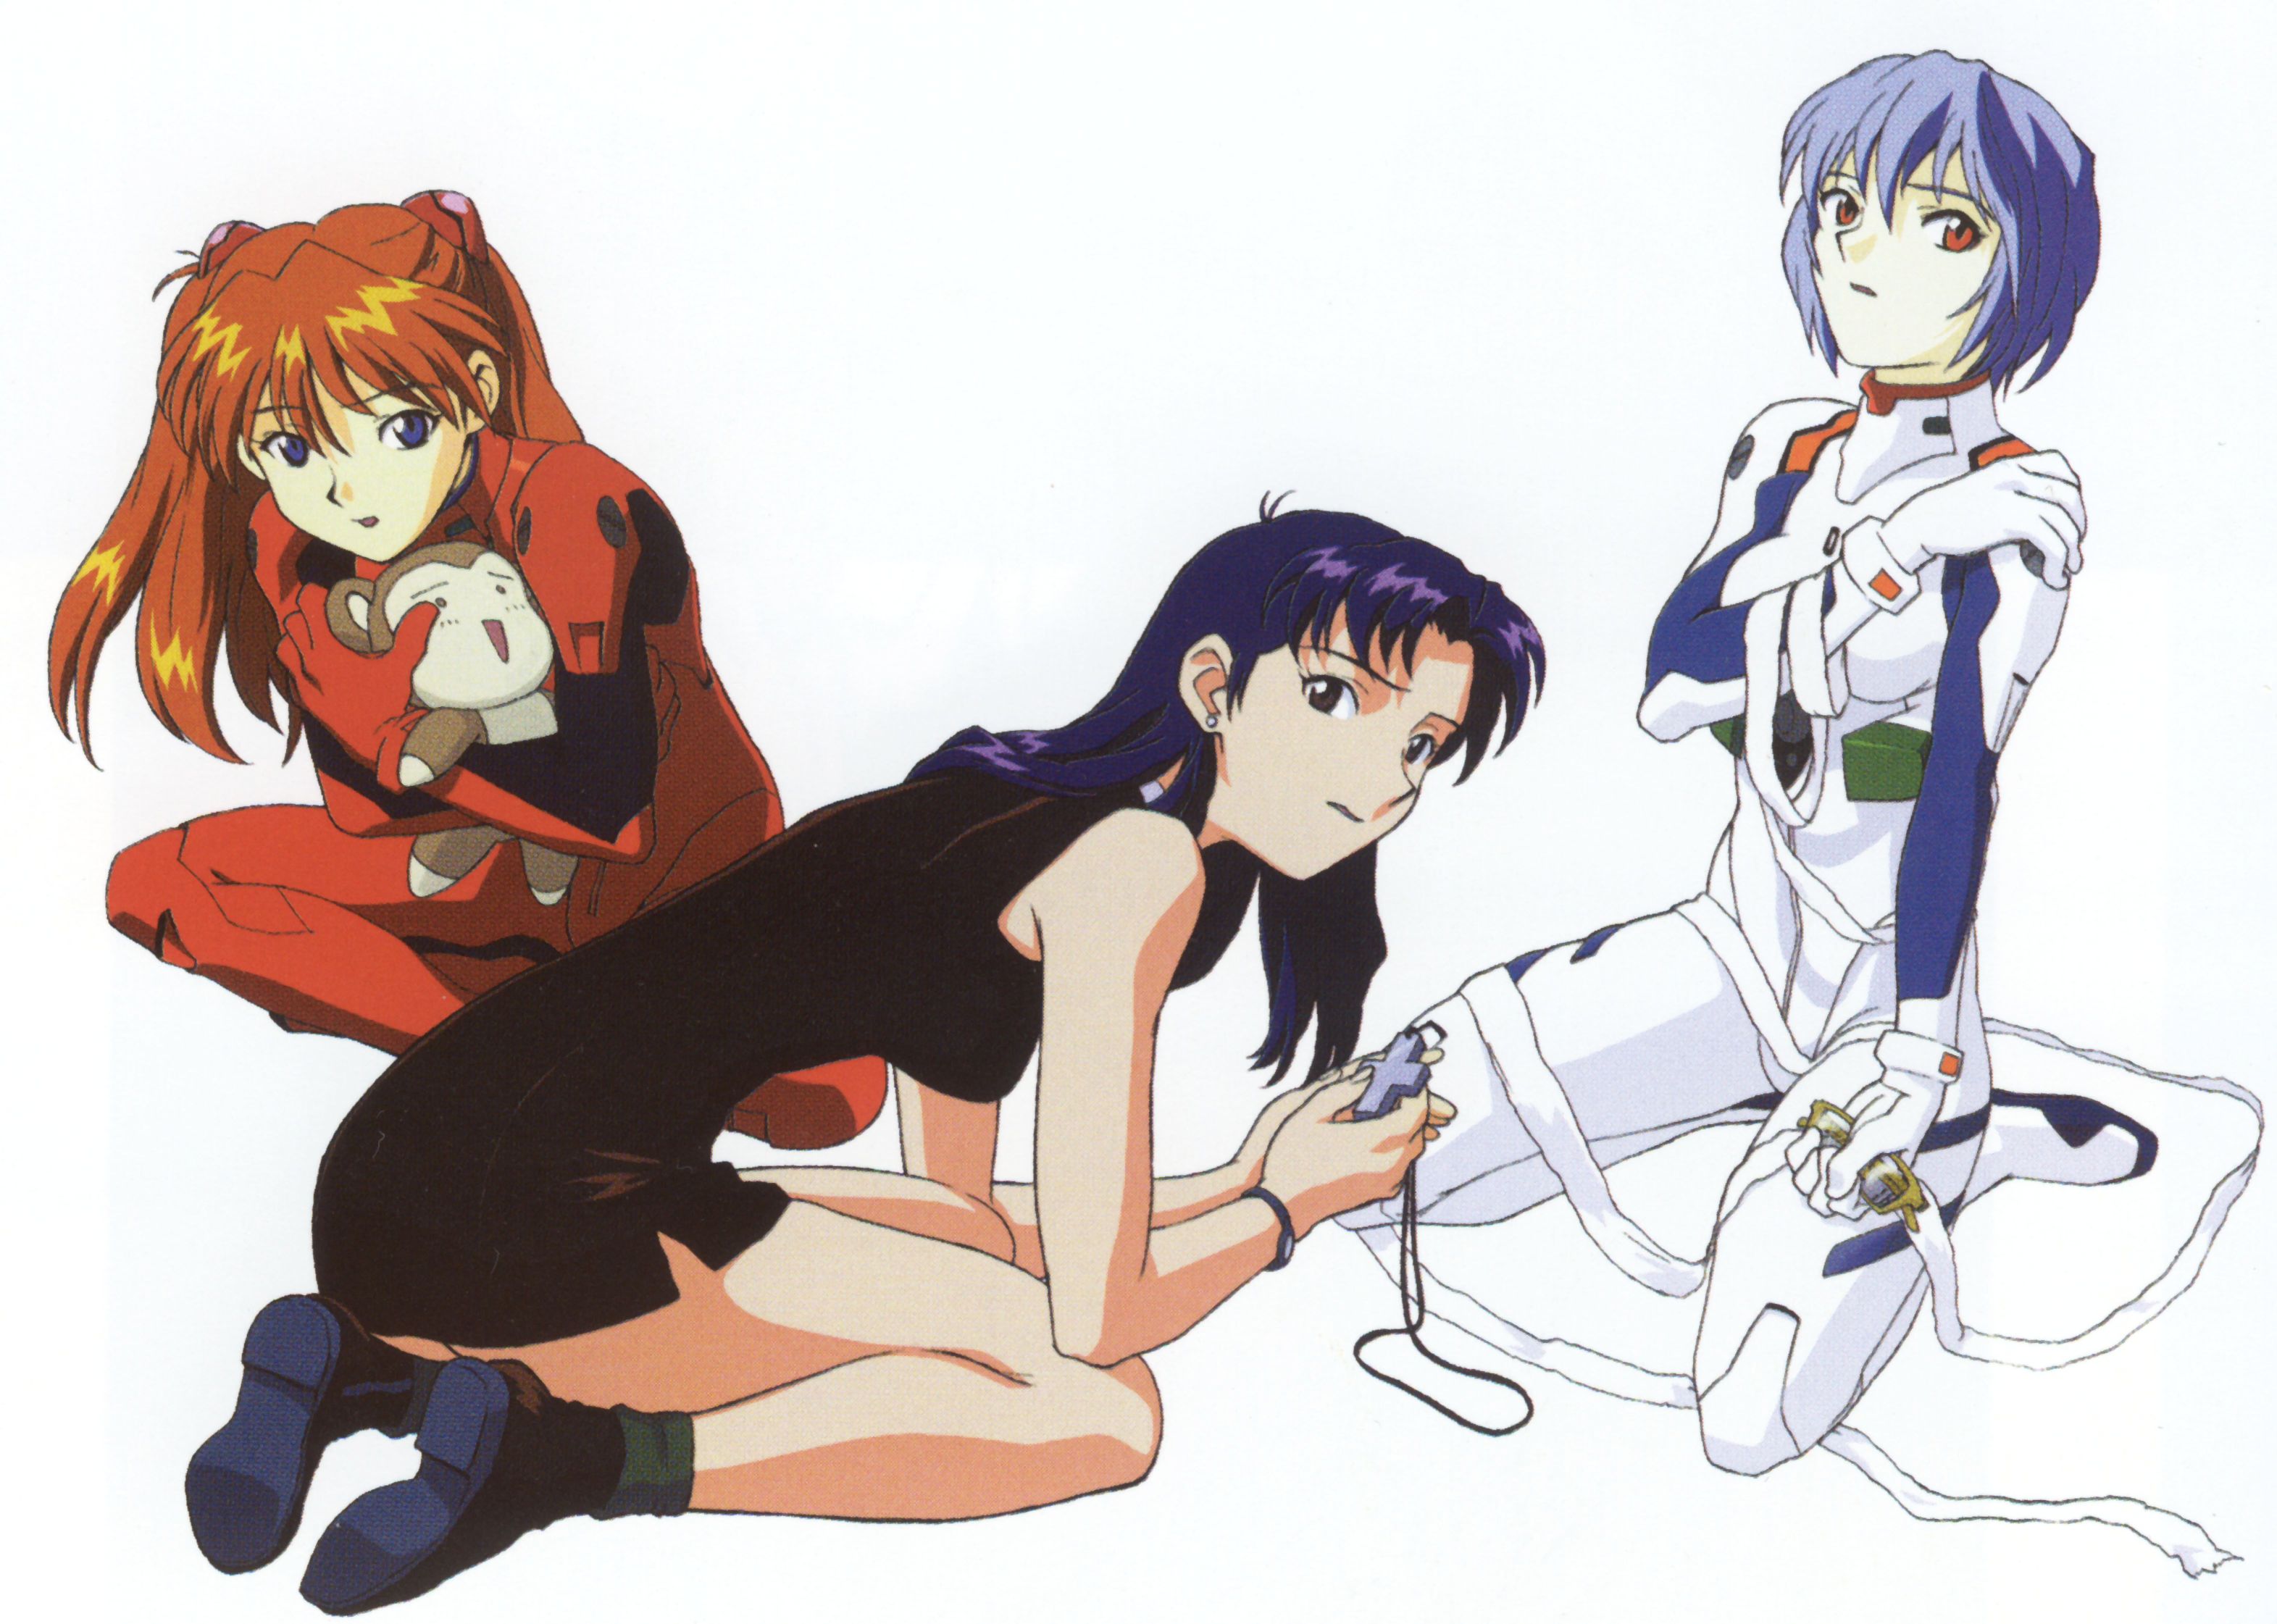 Ayanami Rei, Neon Genesis Evangelion, Katsuragi Misato, Asuka Langley Soryu - desktop wallpaper